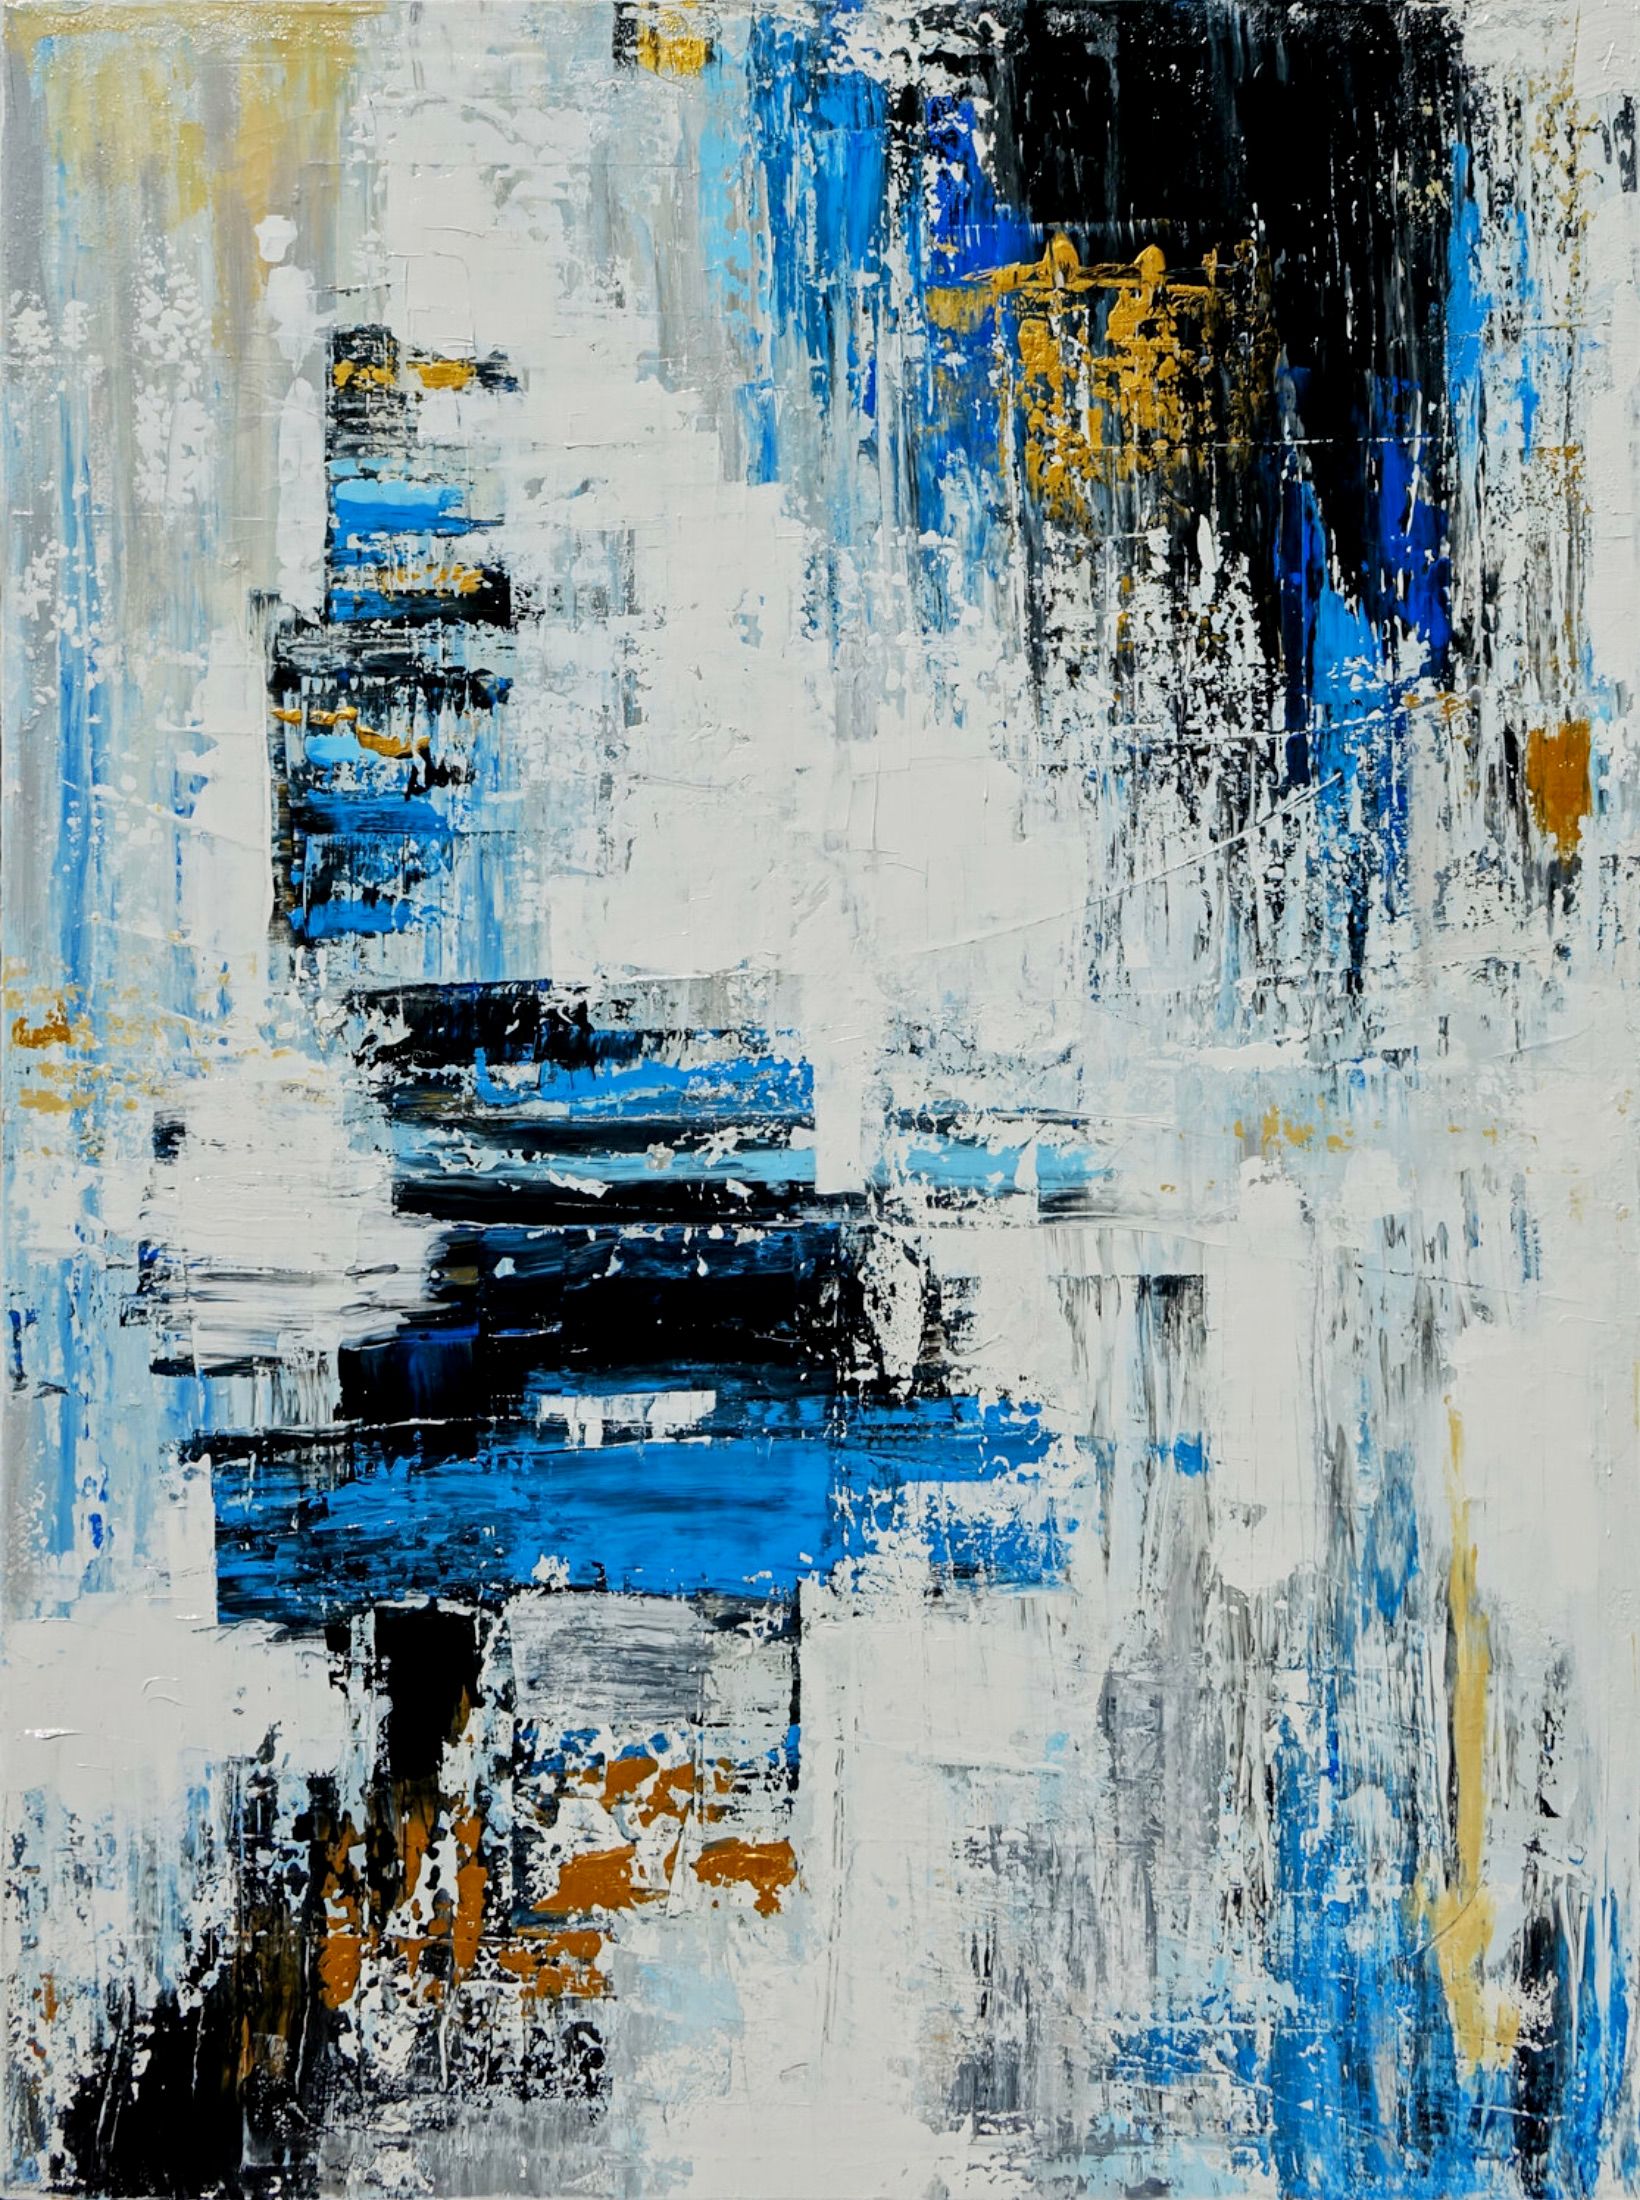 Wojtek Babski, "Abstracto azul", Pintura abstracta sobre lienzo